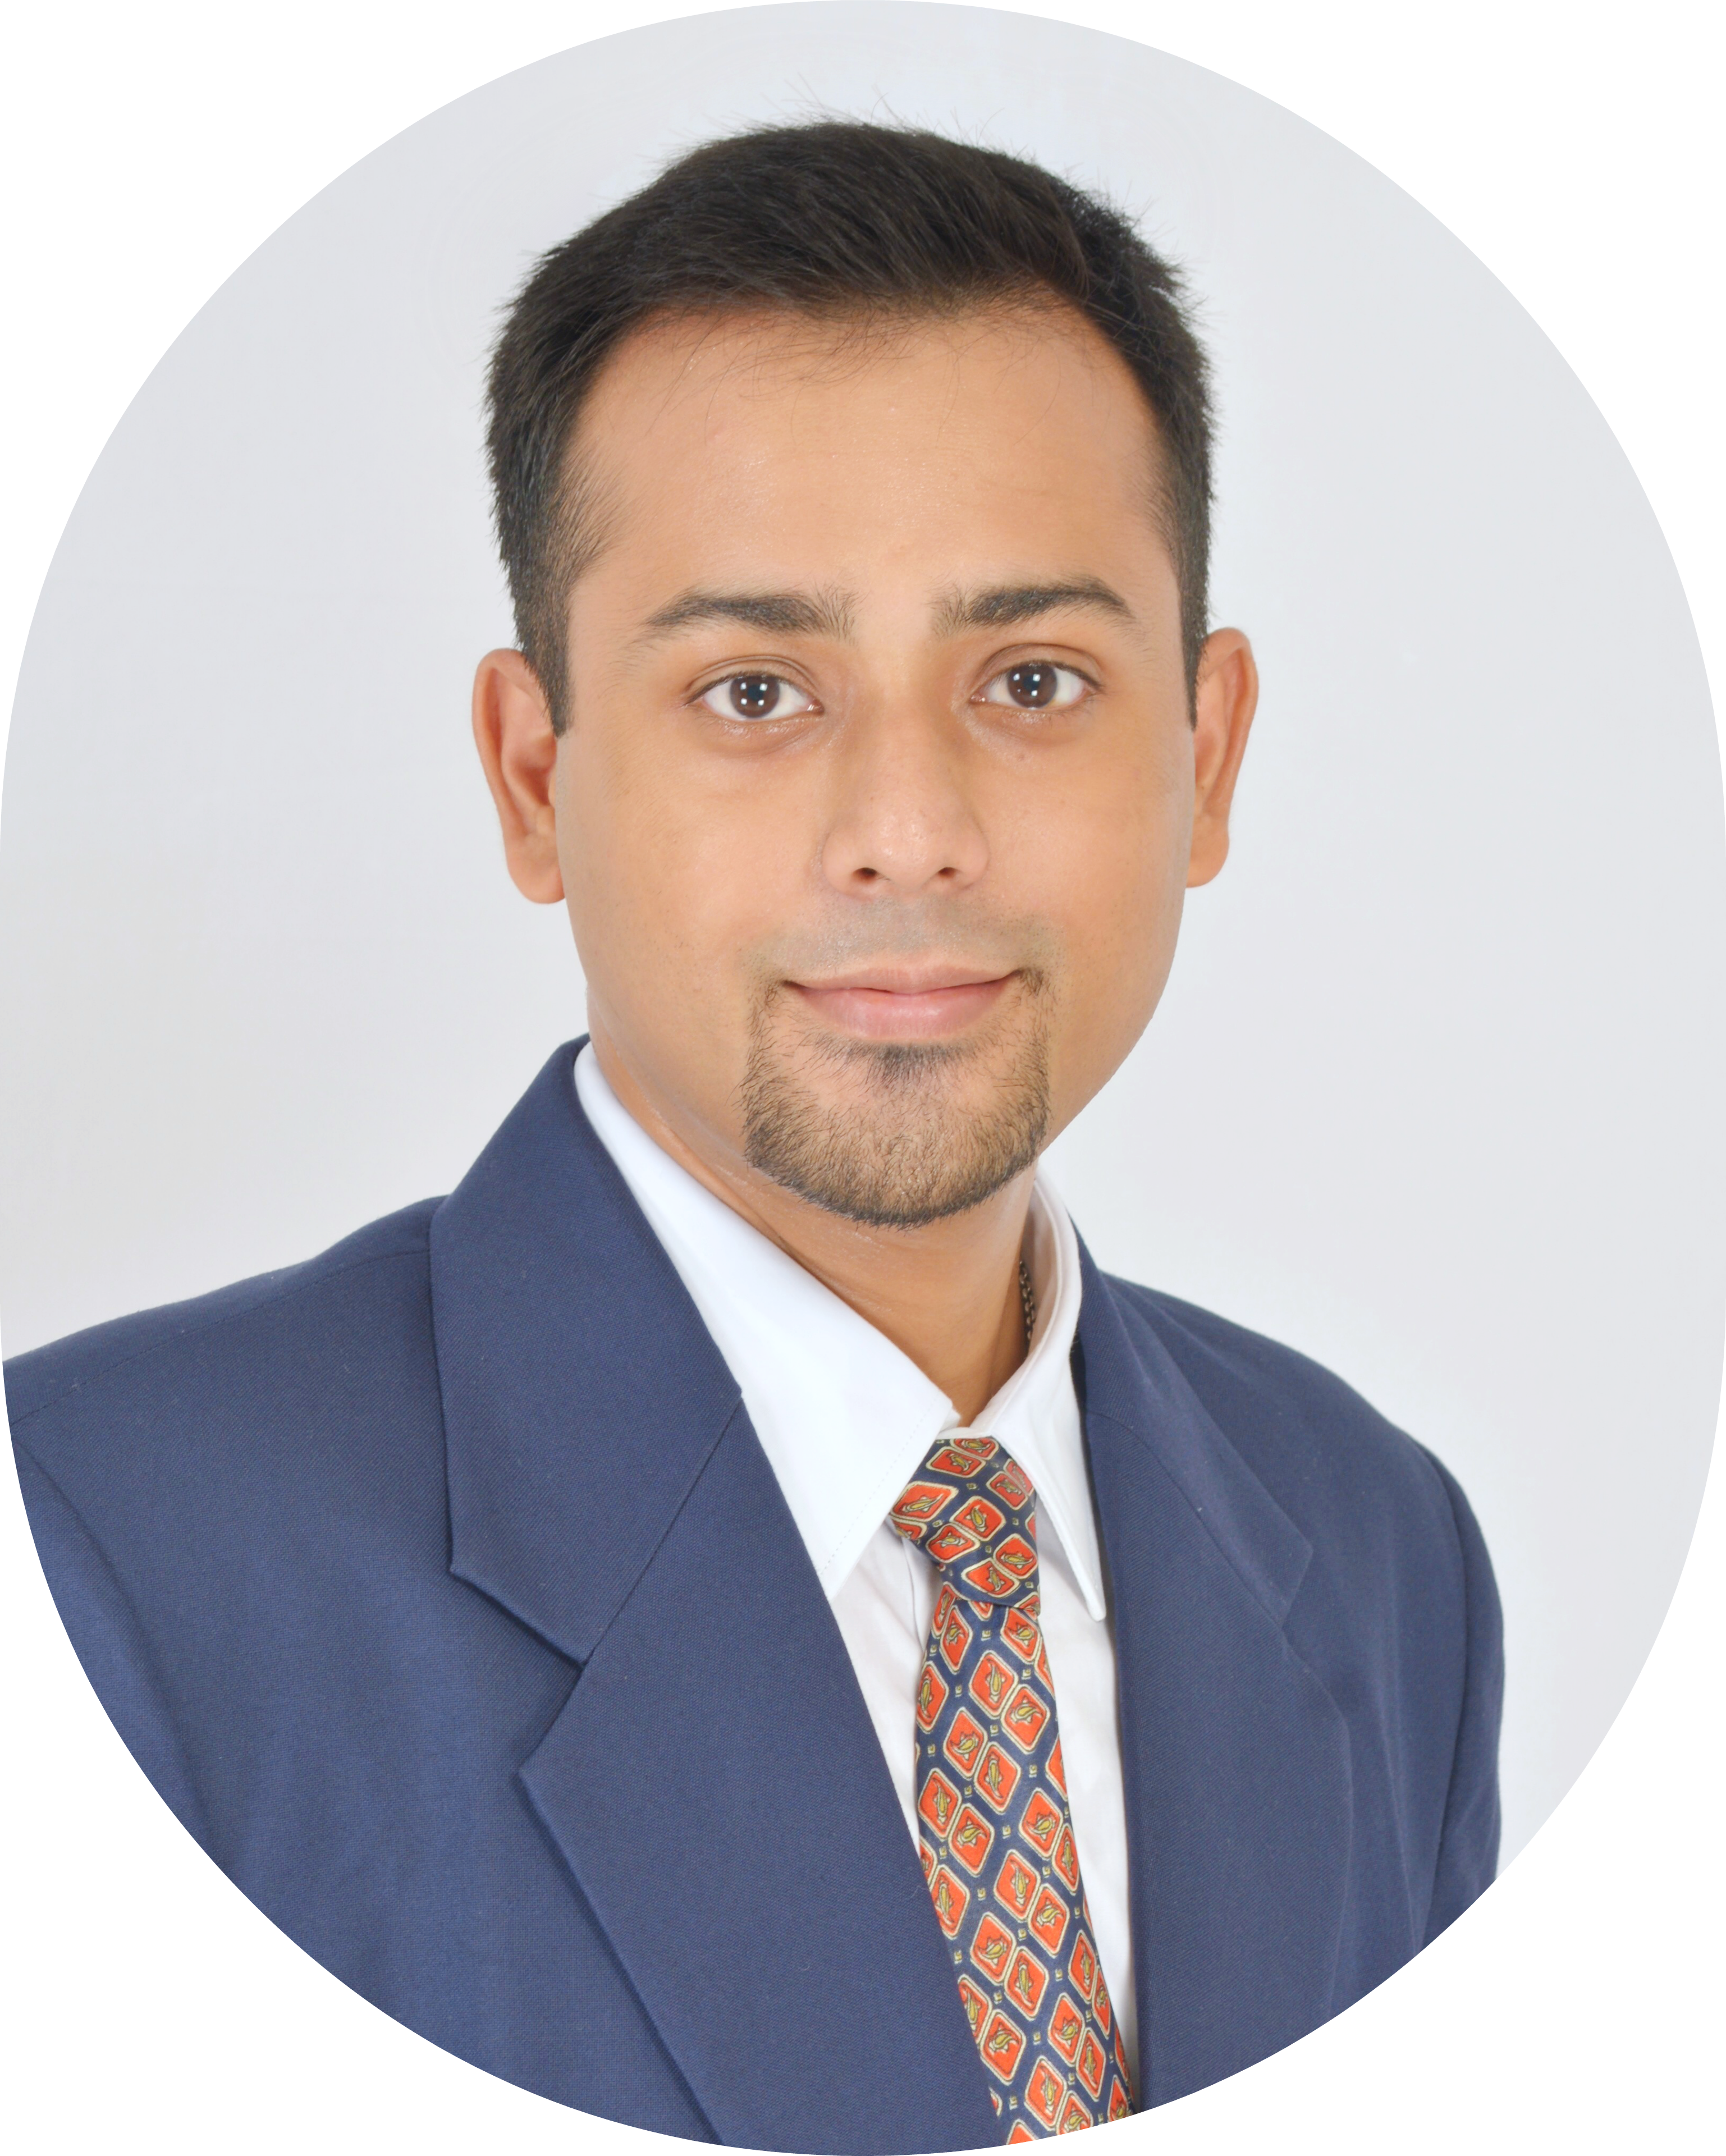 Arijit Sen, Investment Advisor